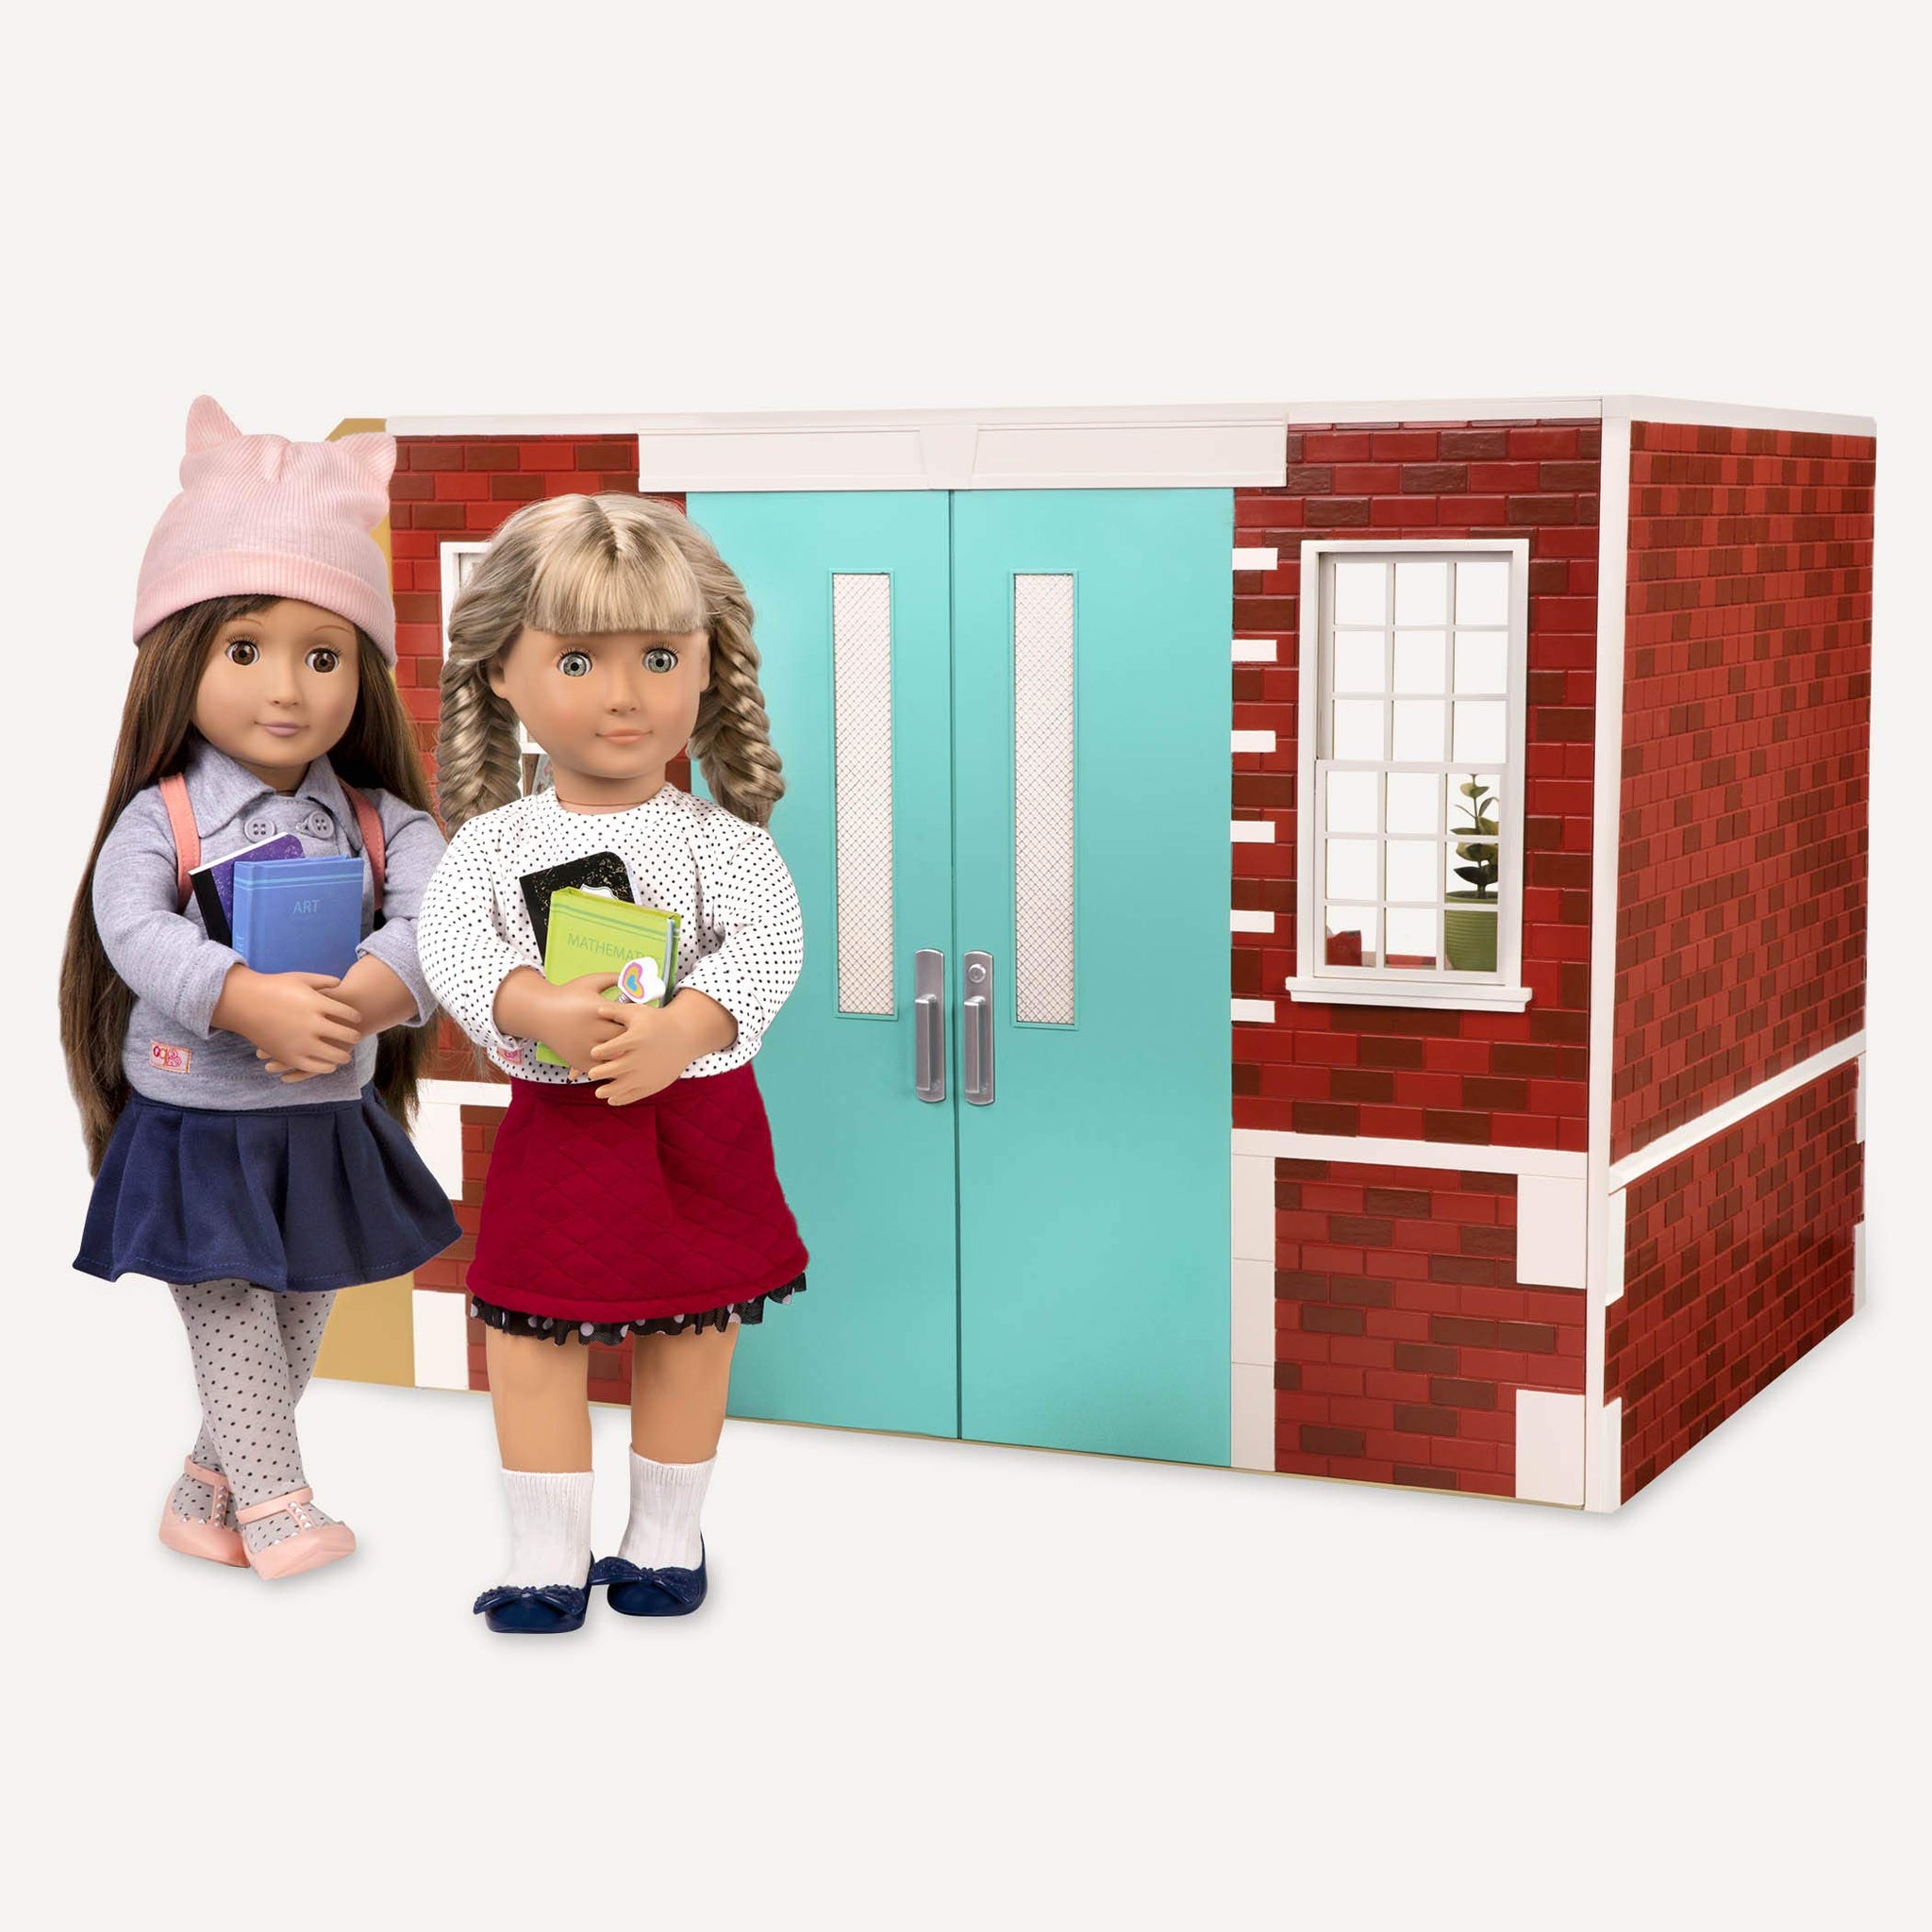 school set for dolls